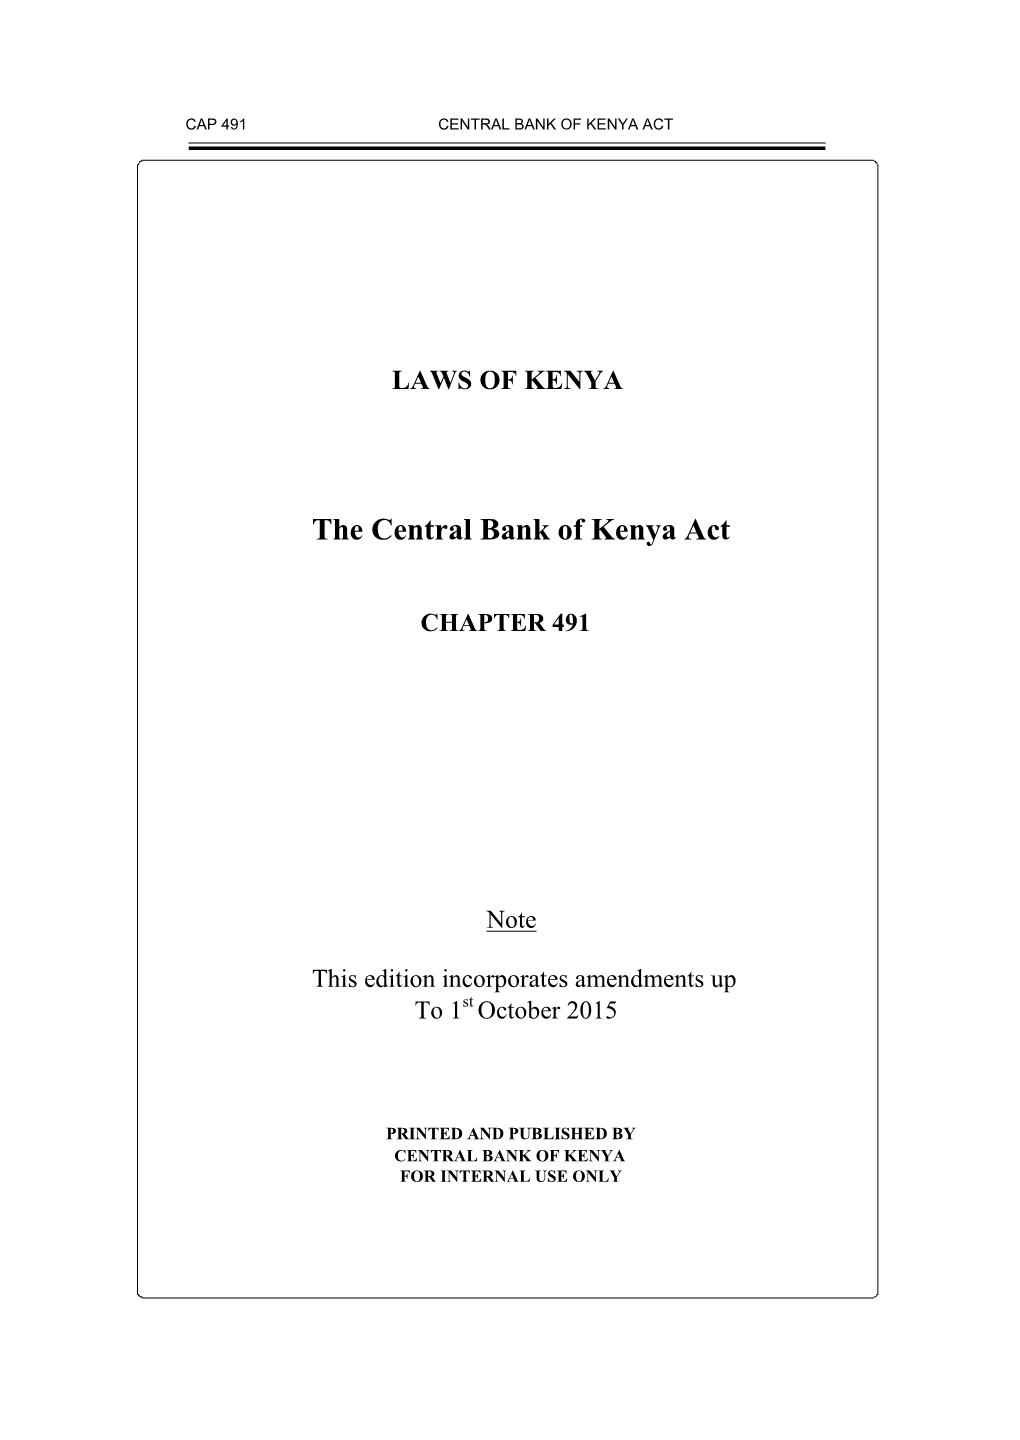 Central Bank of Kenya Act 1St Oct 2015